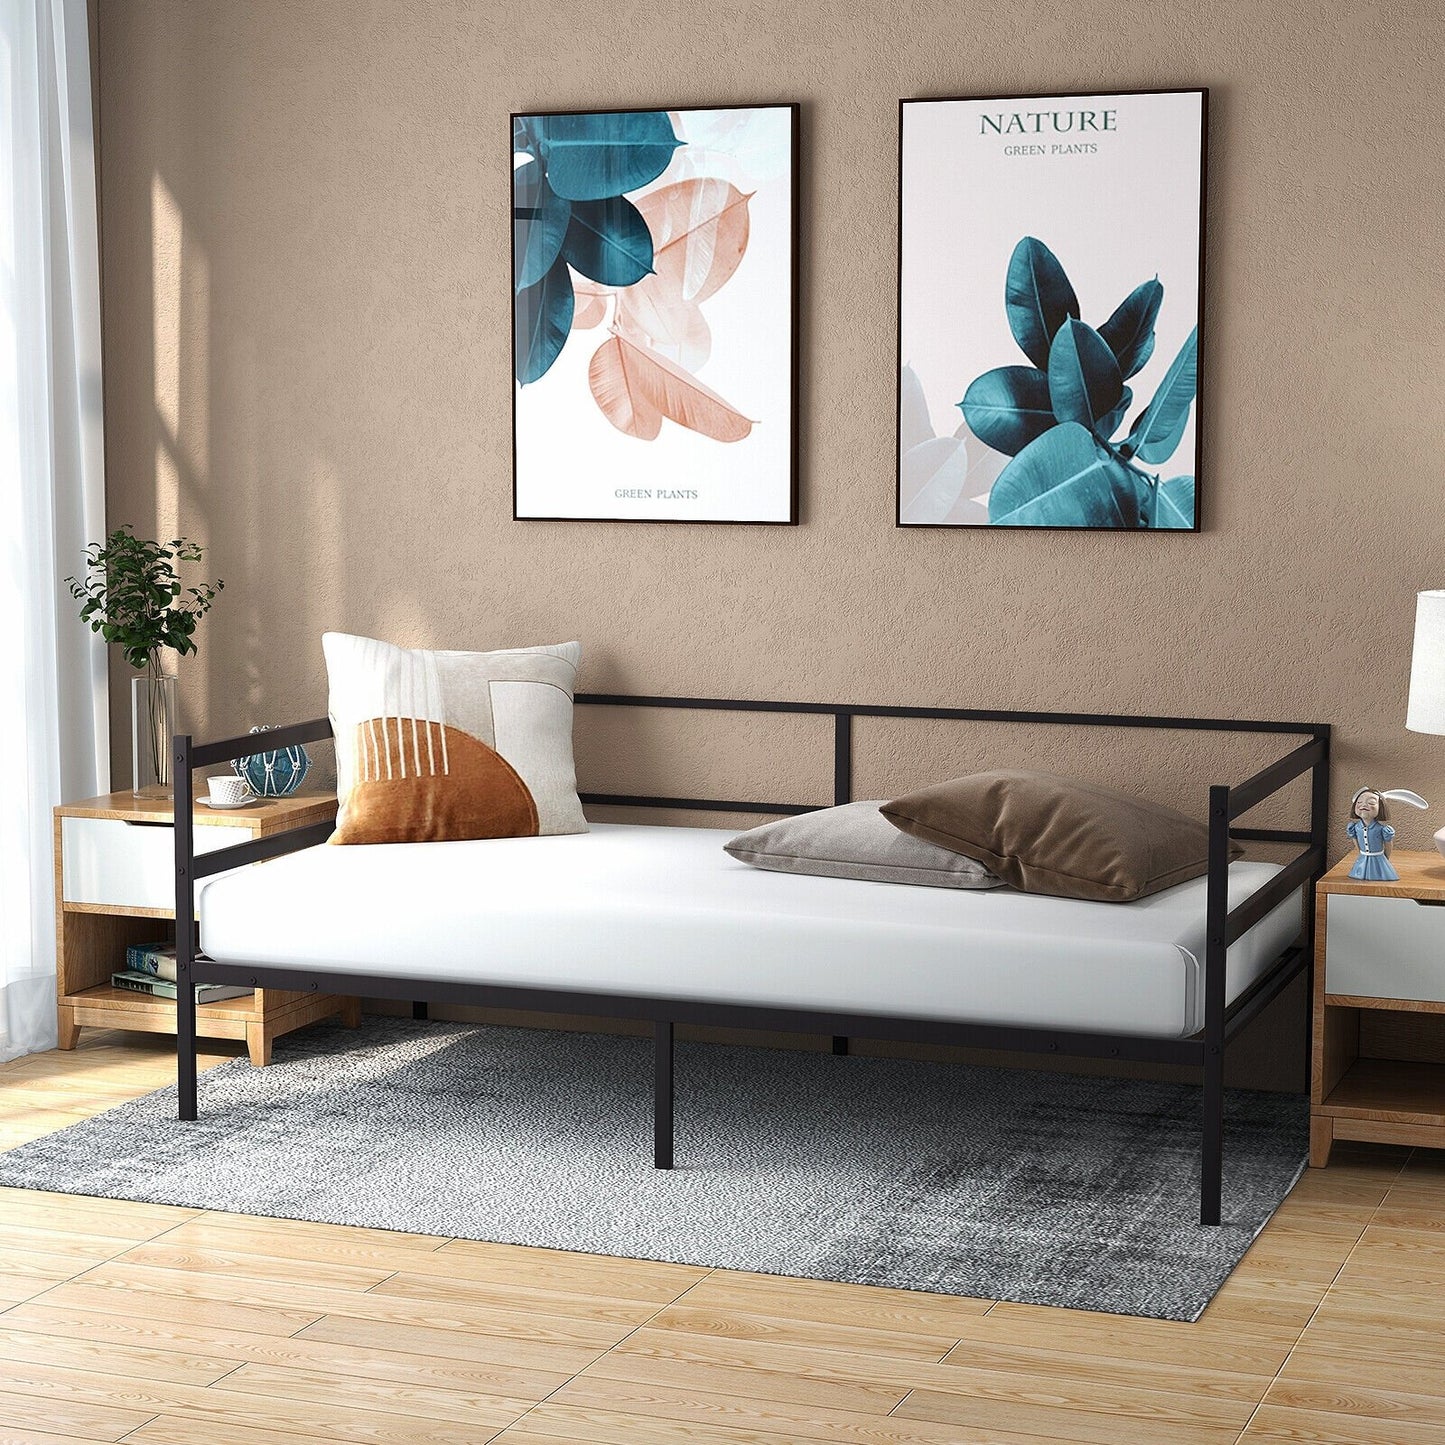 Twin Size Metal Daybed Frame for Living Room Bedroom, Black